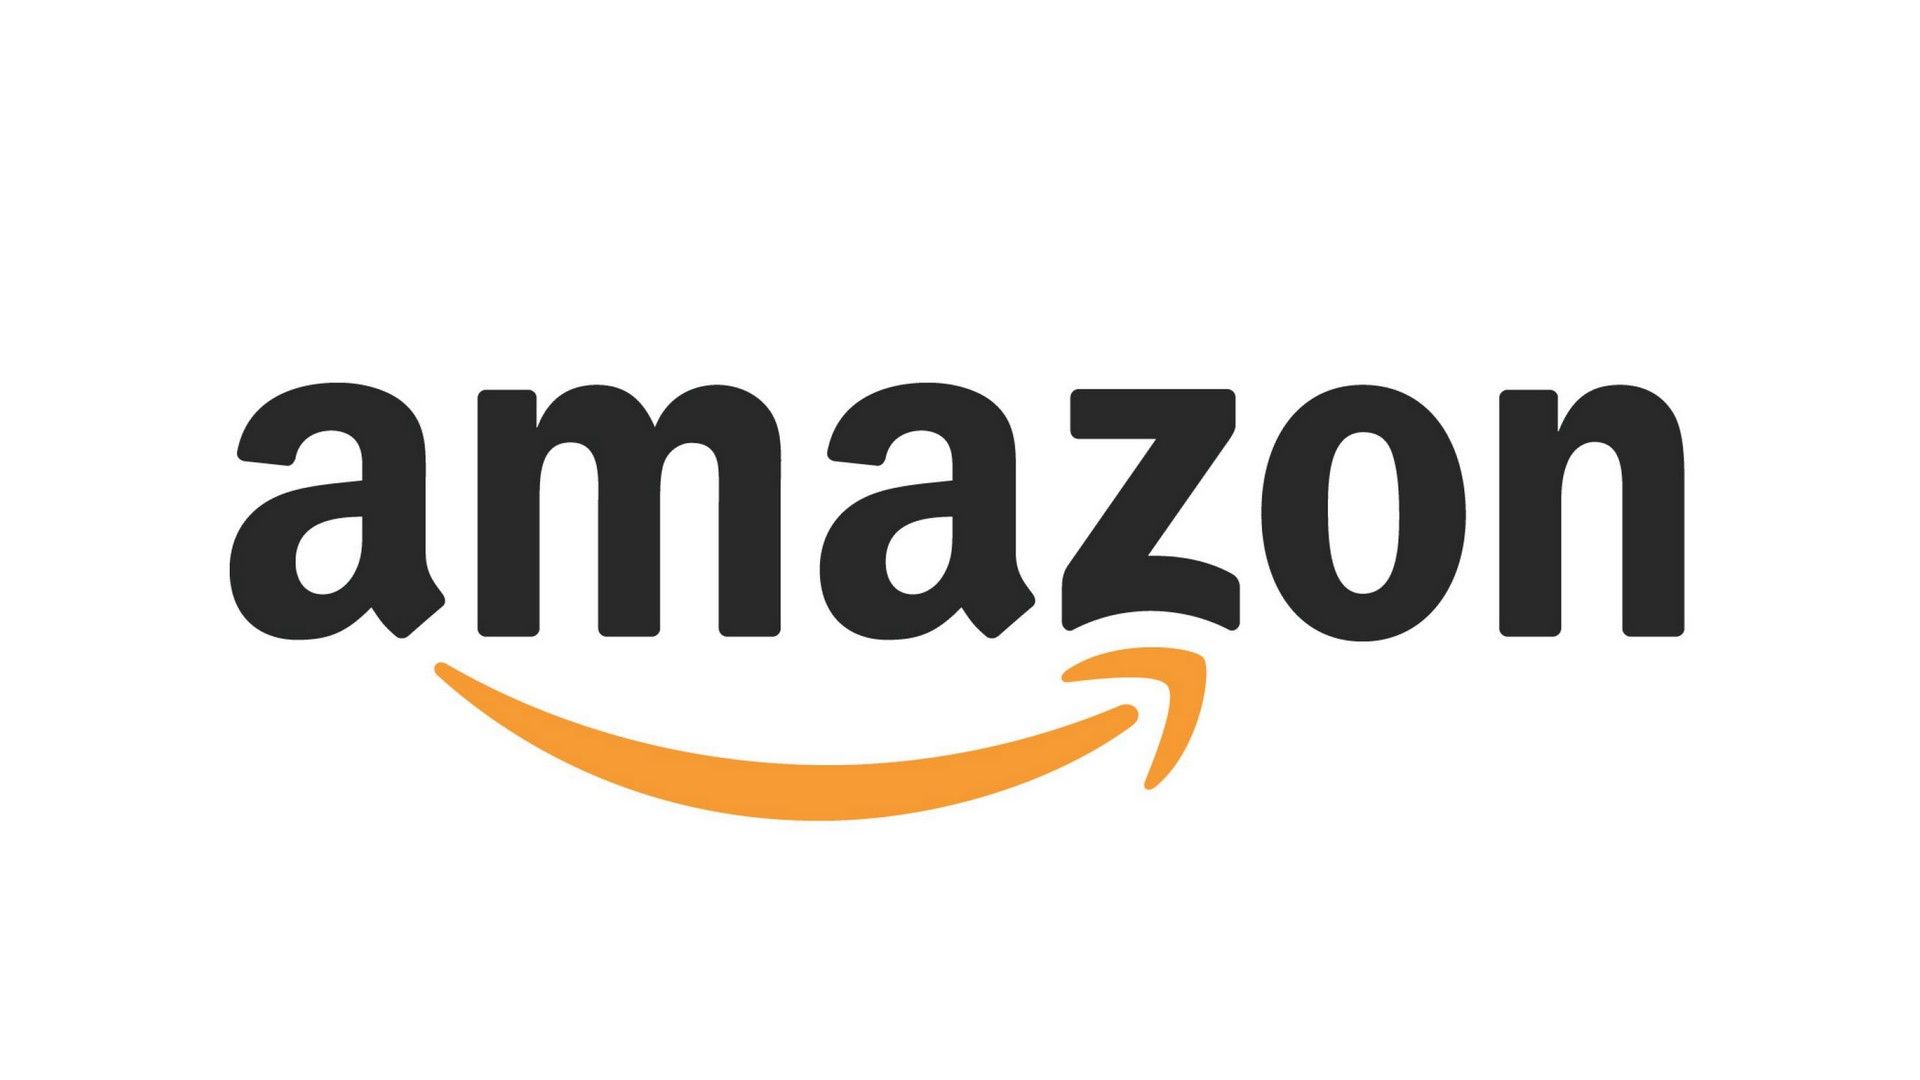  Amazon Hintergrundbild 1920x1080. Amazon Logo Wallpaper Free Amazon Logo Background